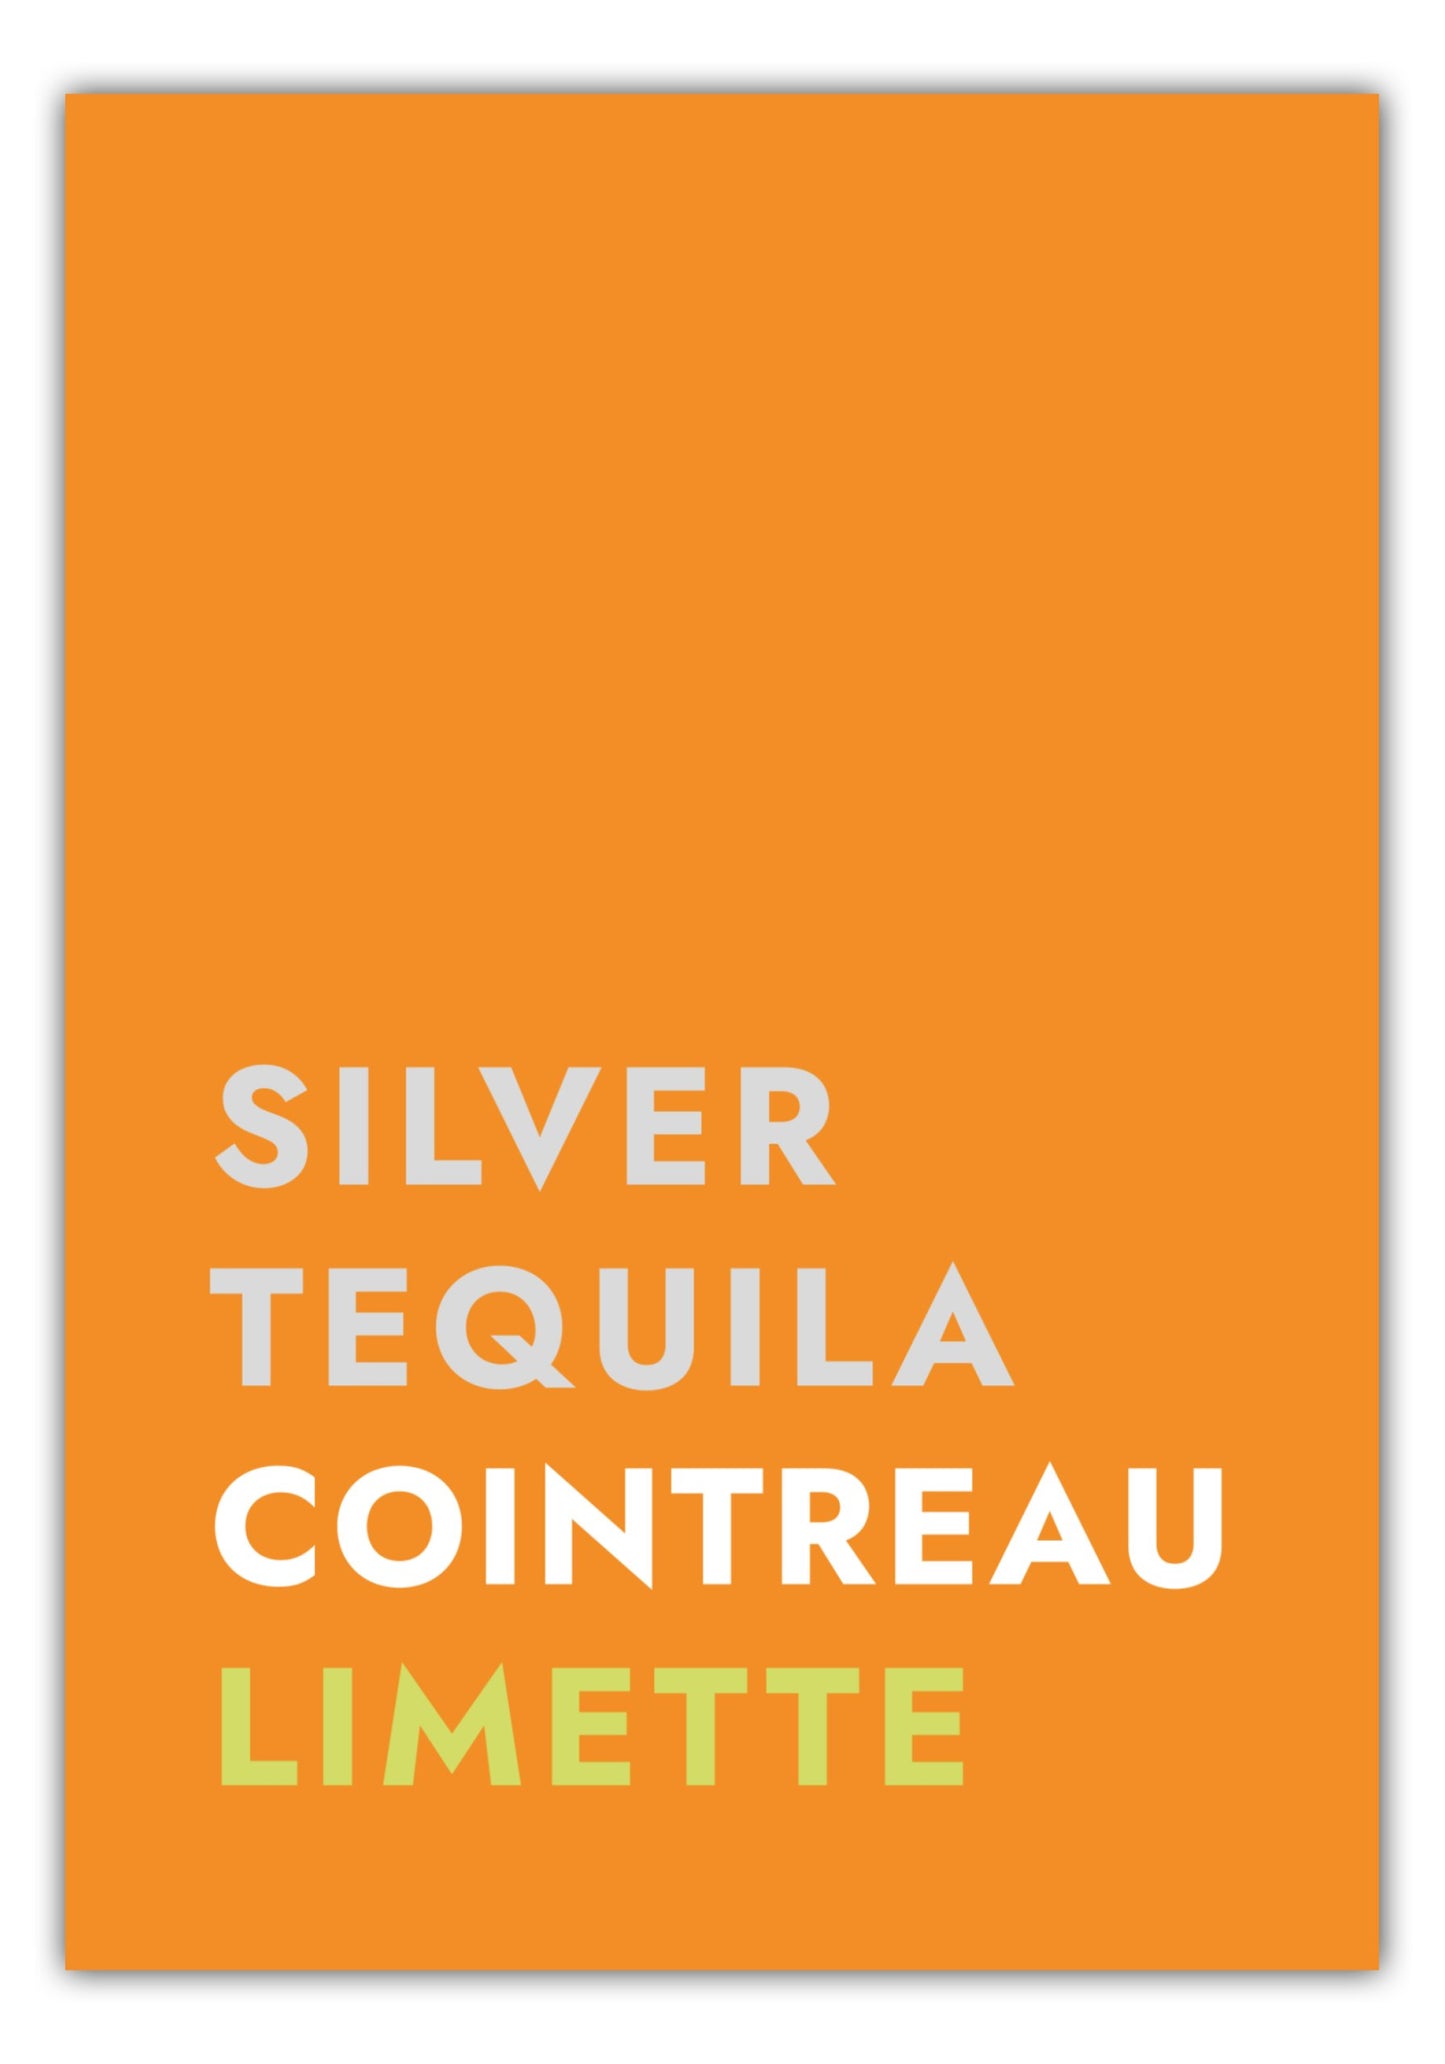 Poster Cocktail Margarita - Text